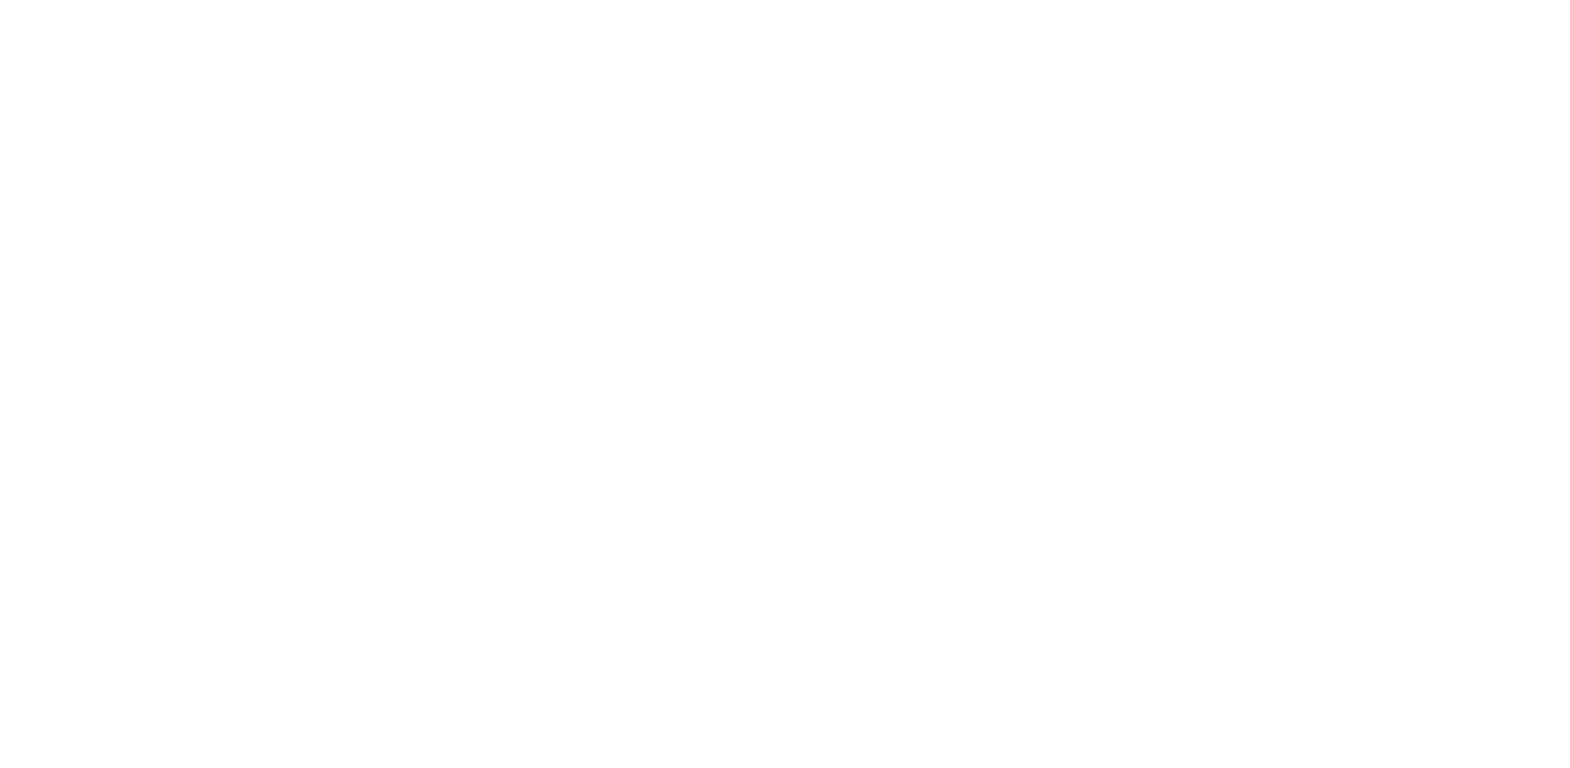 Celtic Frost – Morbid Tales